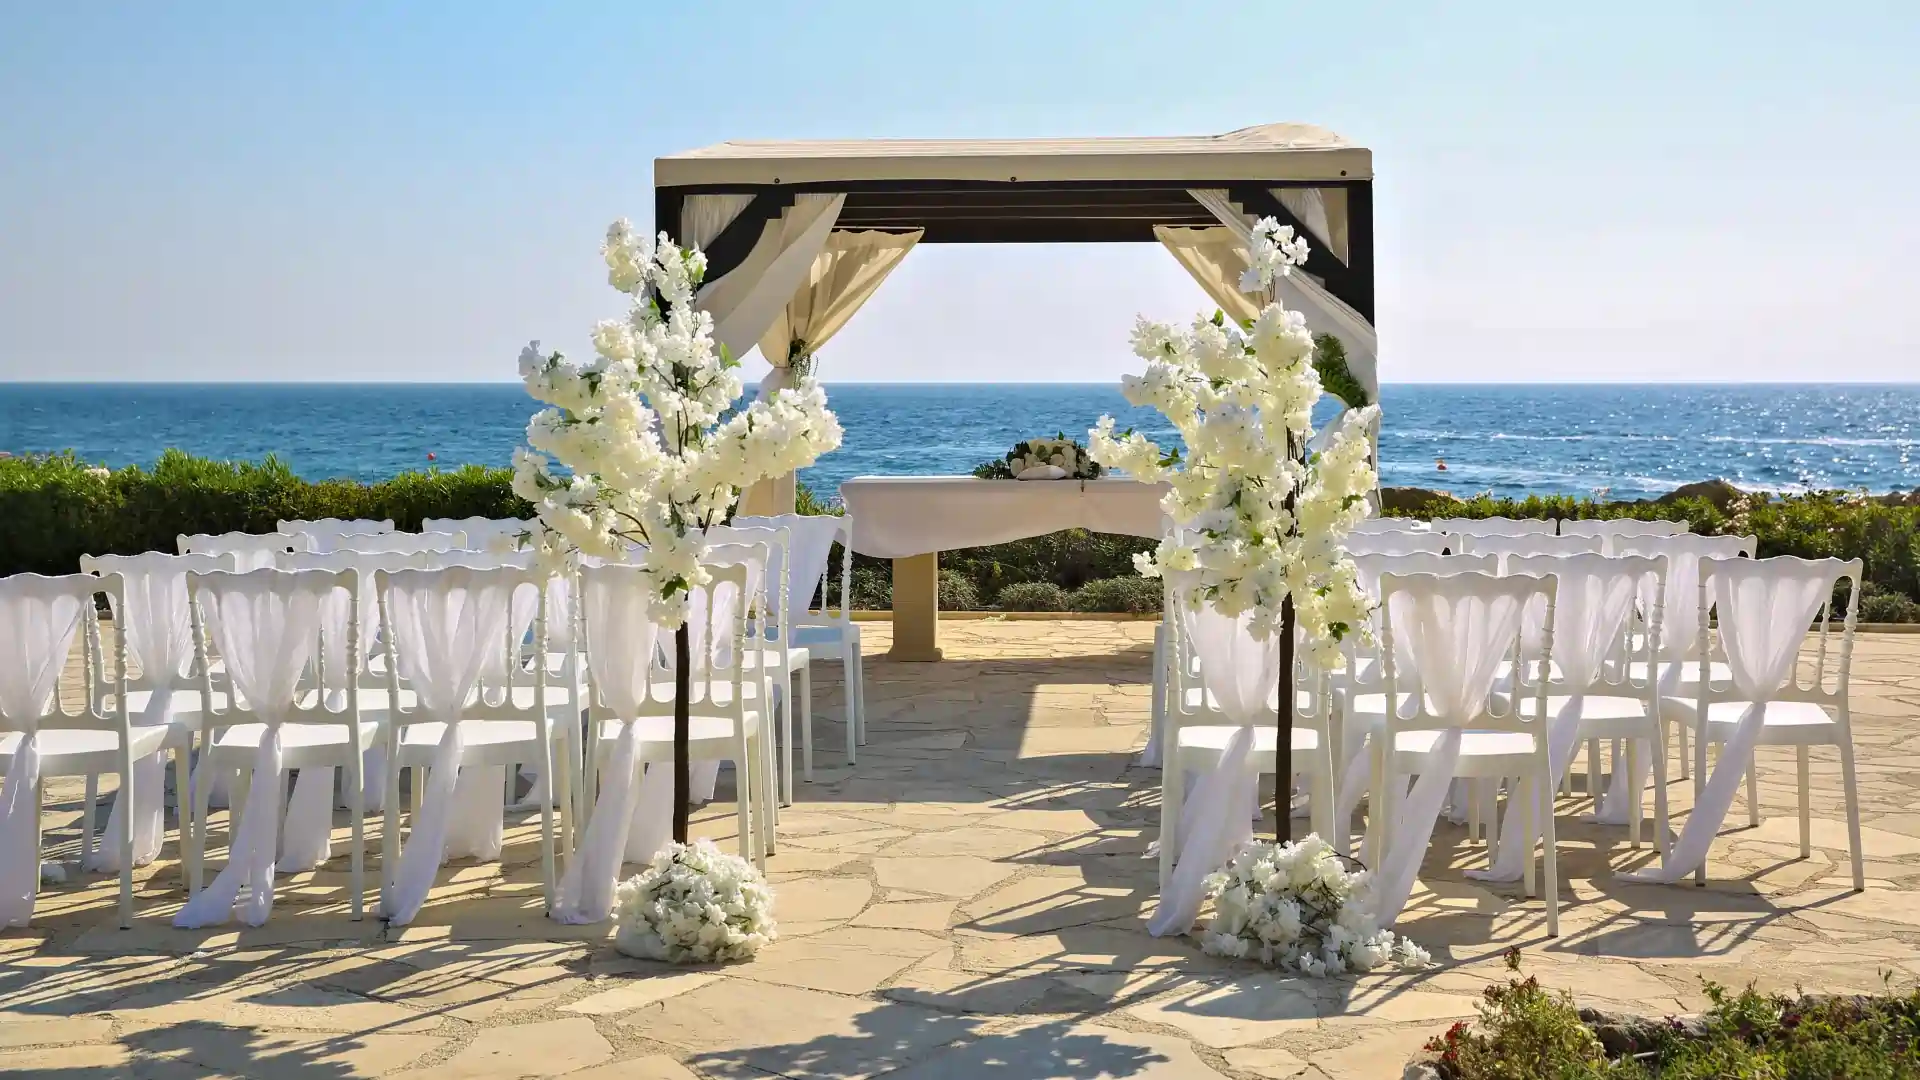 Leonardo Plaza Cypria Maris Beach Hotel & Spa - Weddings